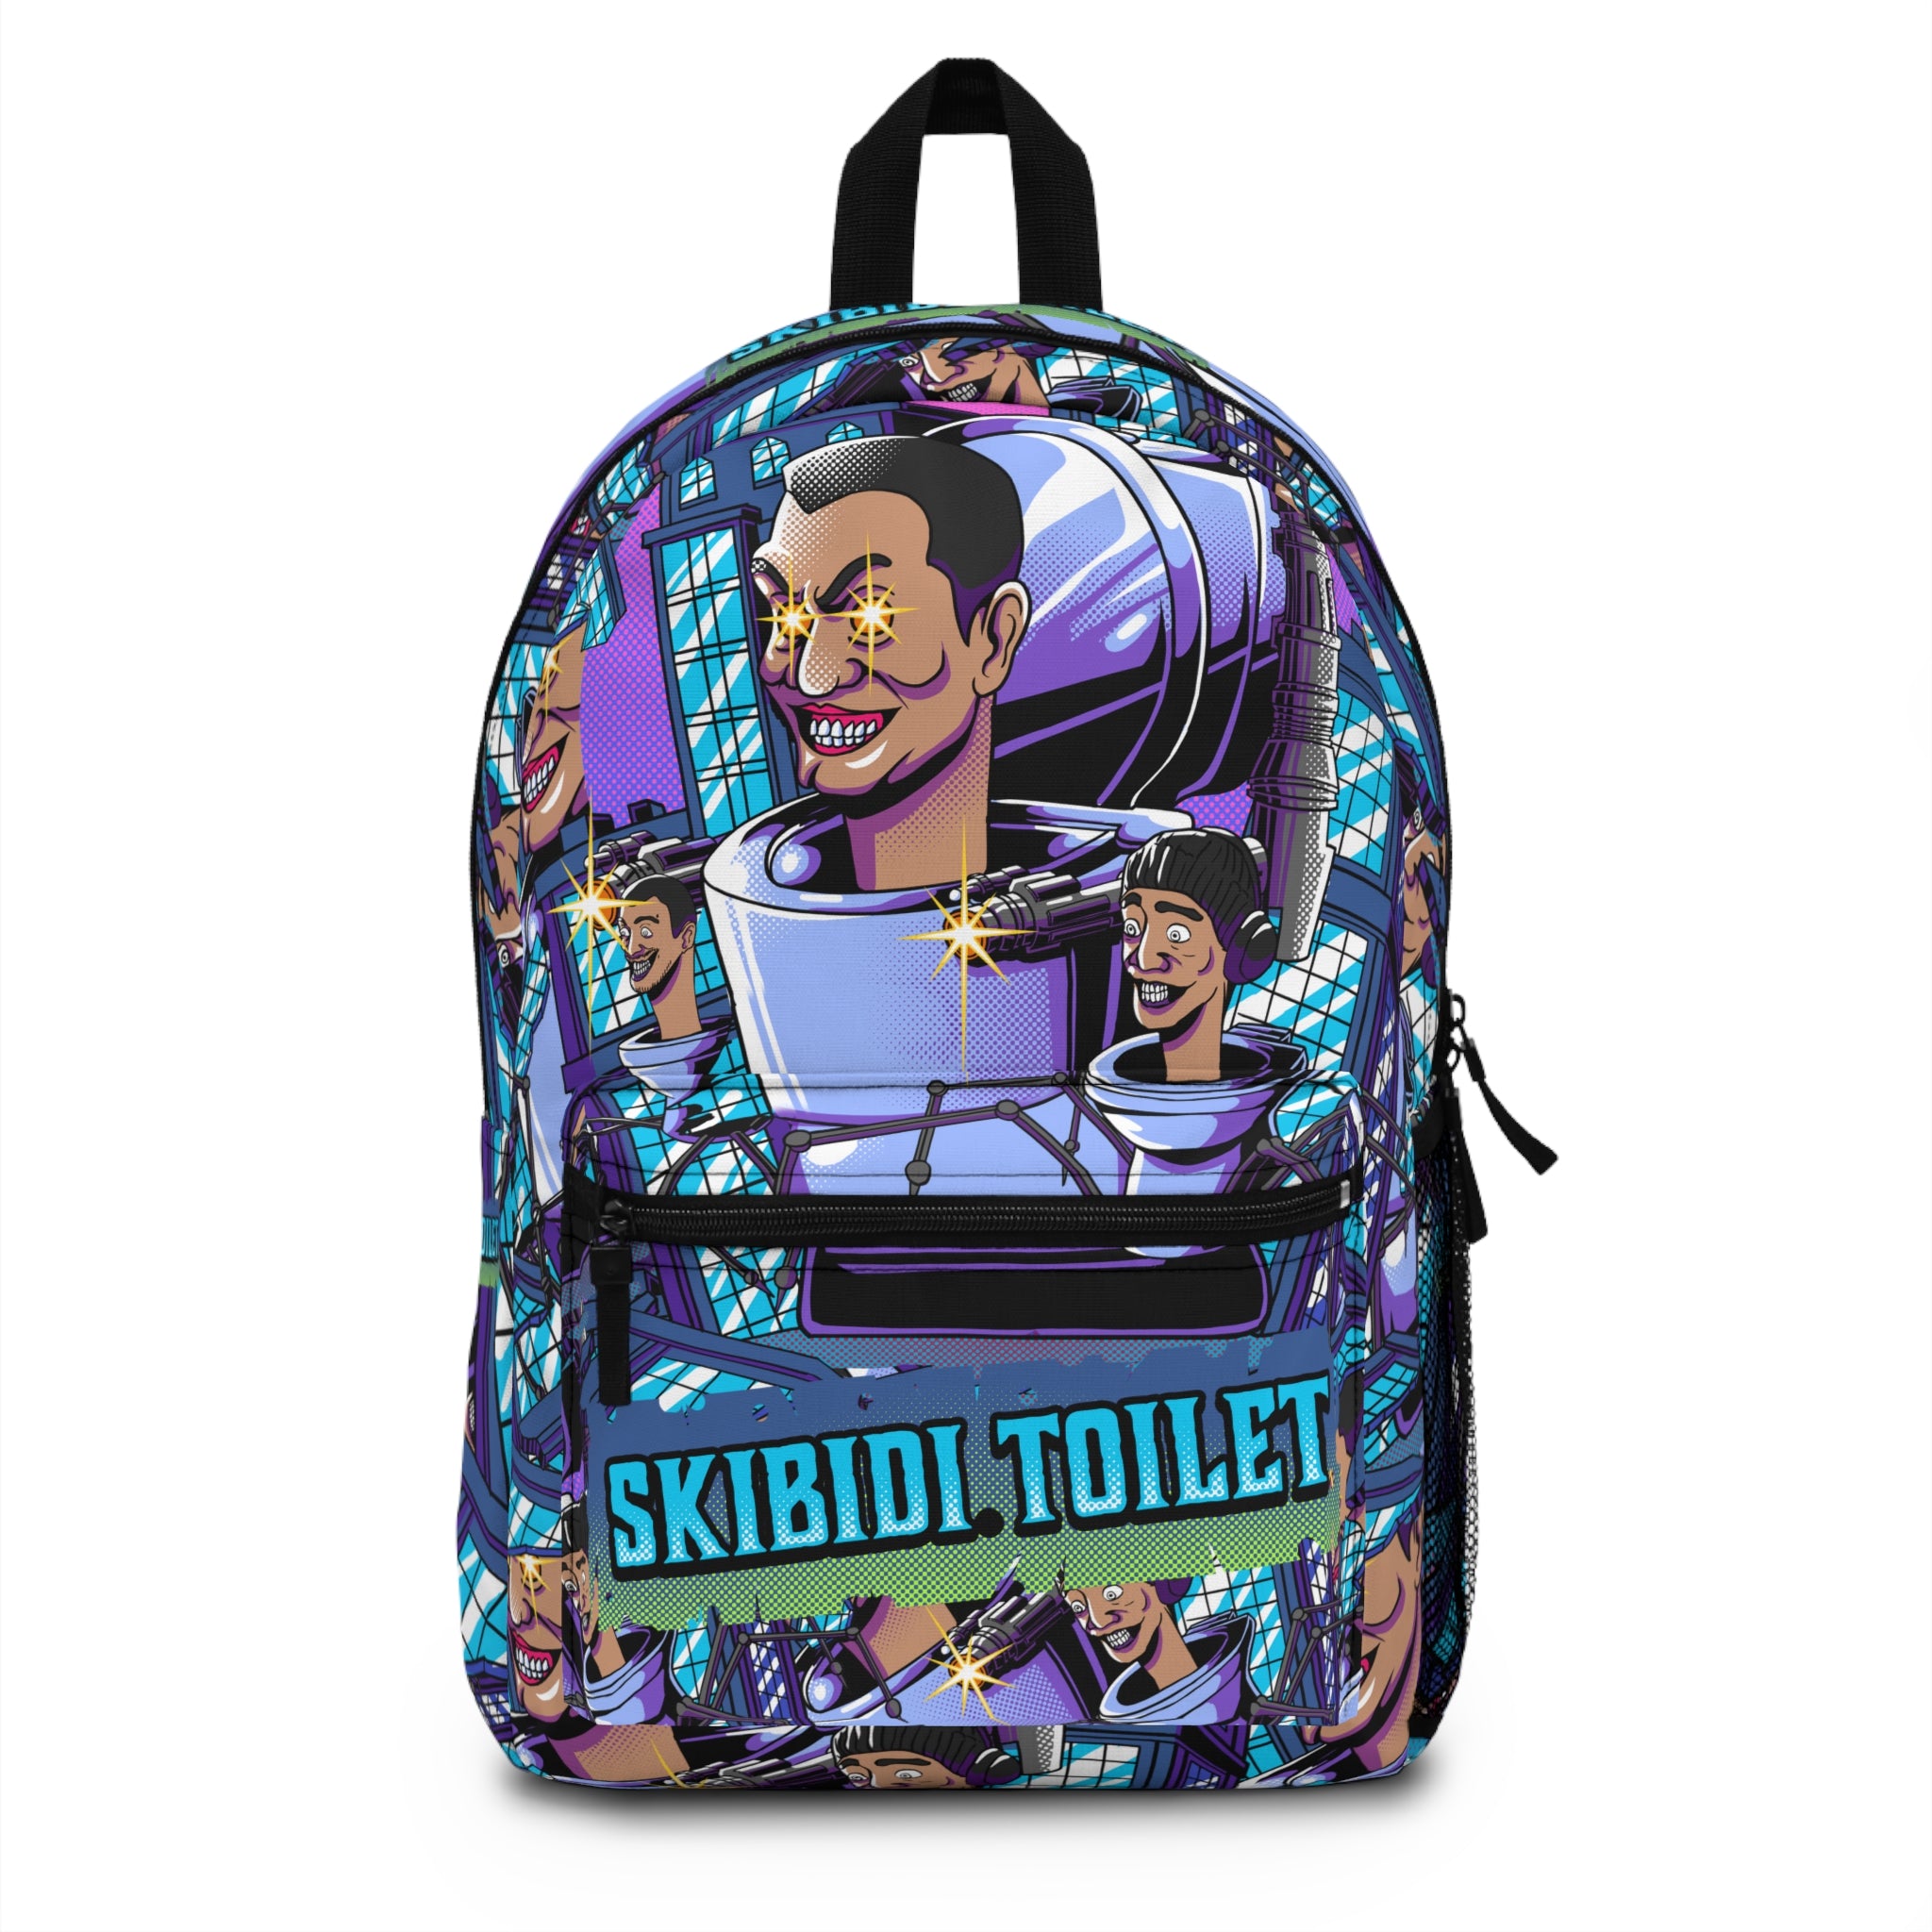 Skibidi toilets Miami-themed backpack, dafuq!?boom!